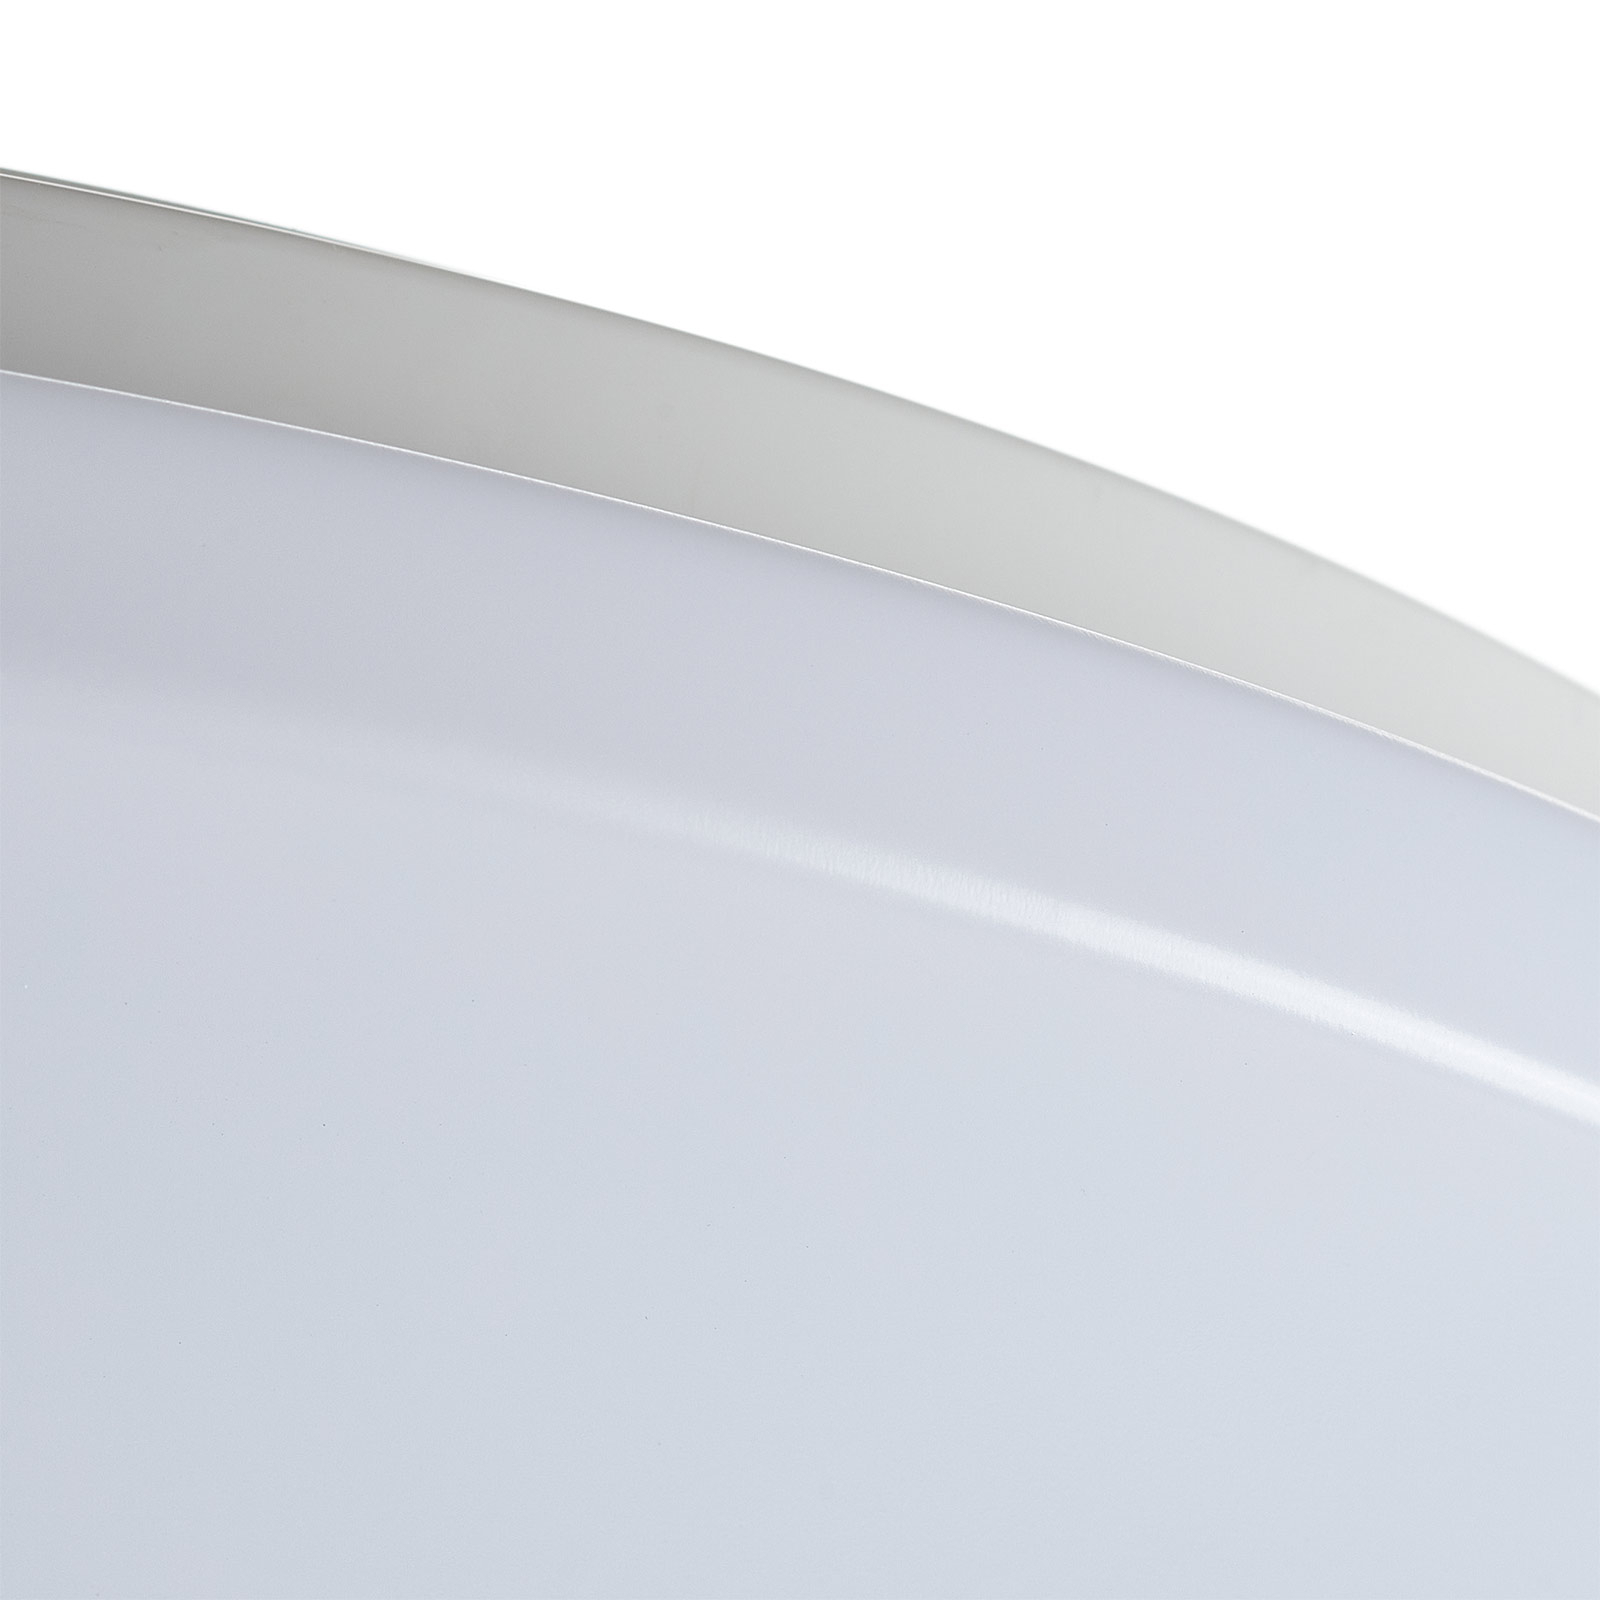 LED-taklampa Pollux, rörelsesensor, Ø 27 cm